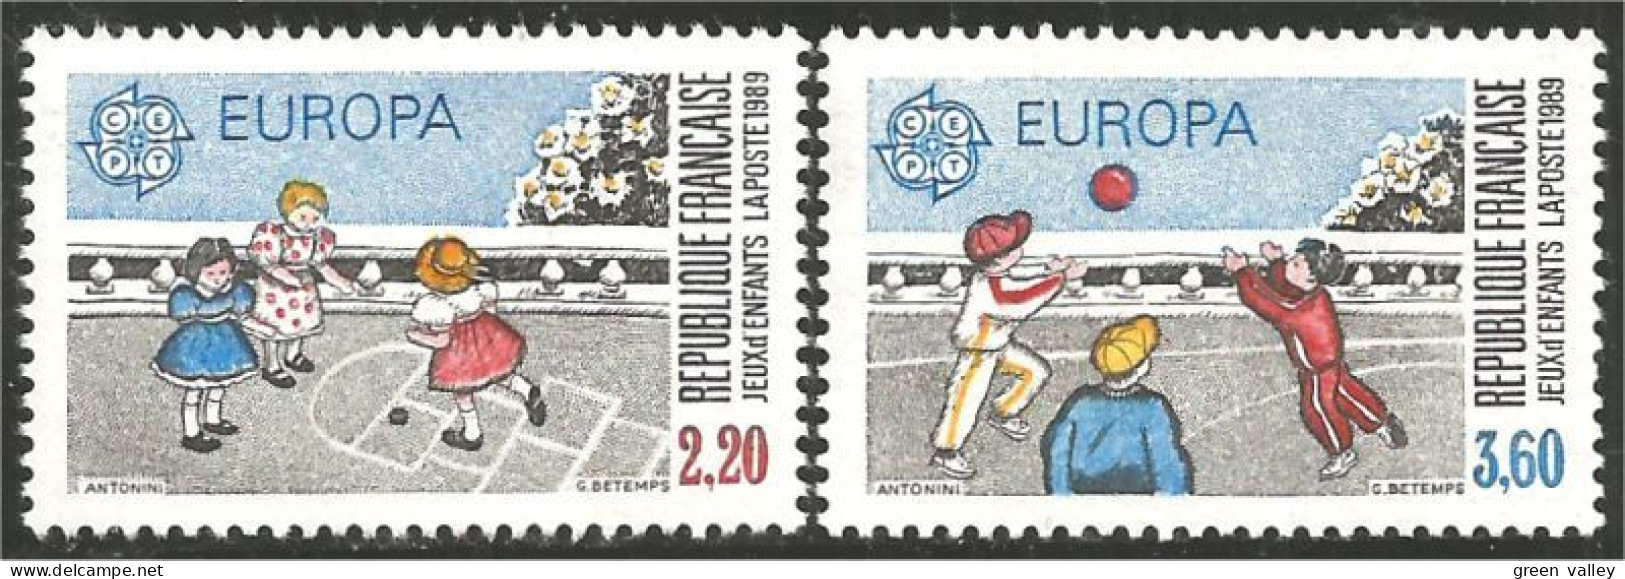 EU89-3a EUROPA-CEPT 1989 France Jeux Enfants Children Games Kinderspiele MNH ** Neuf SC - 1989